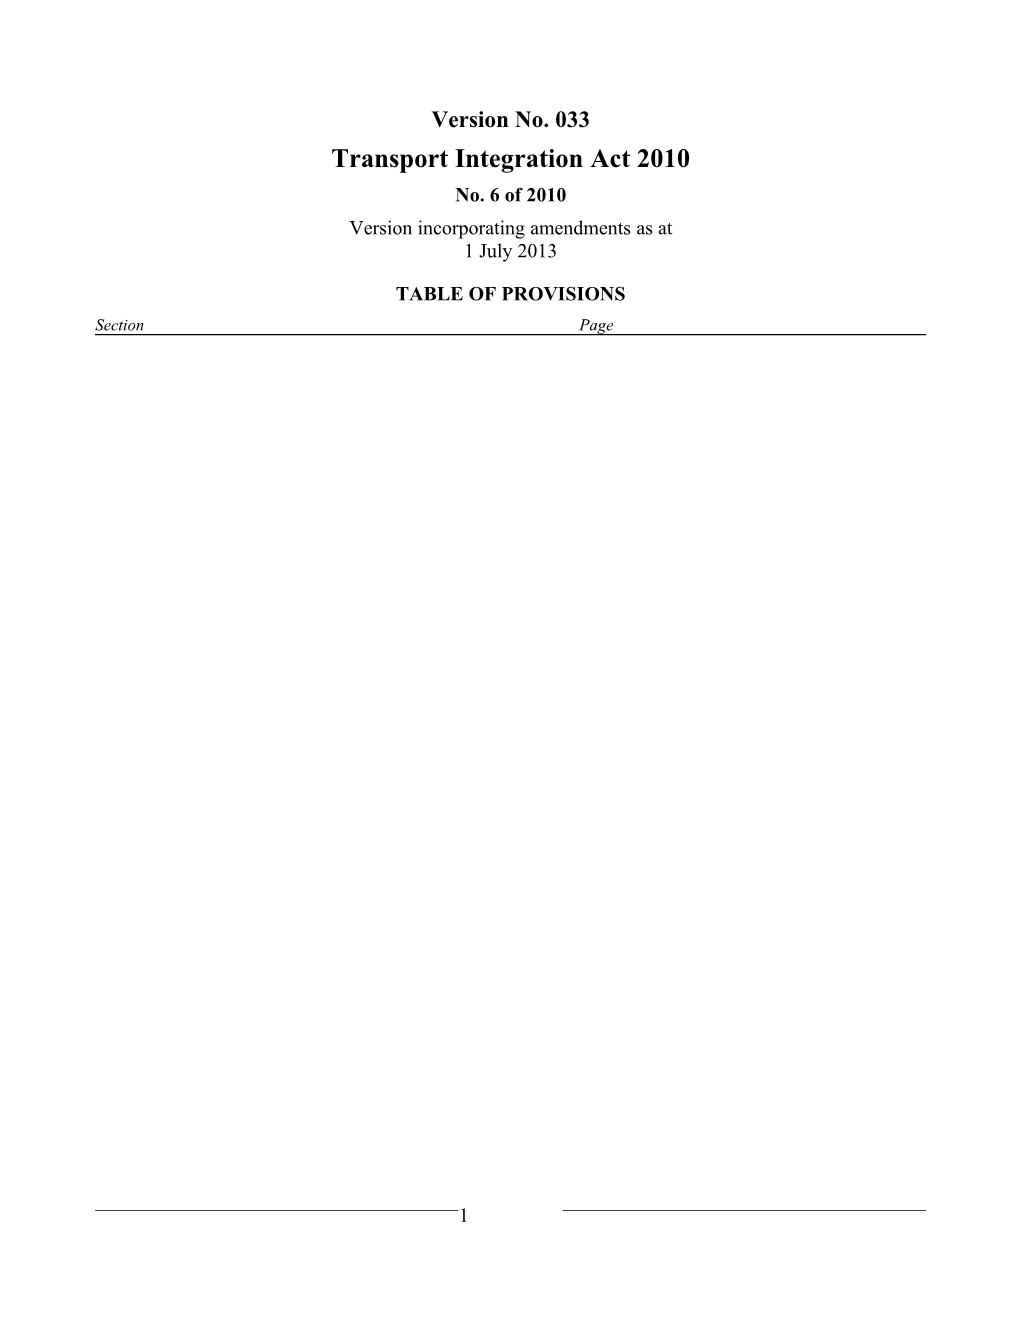 Transport Integration Act 2010